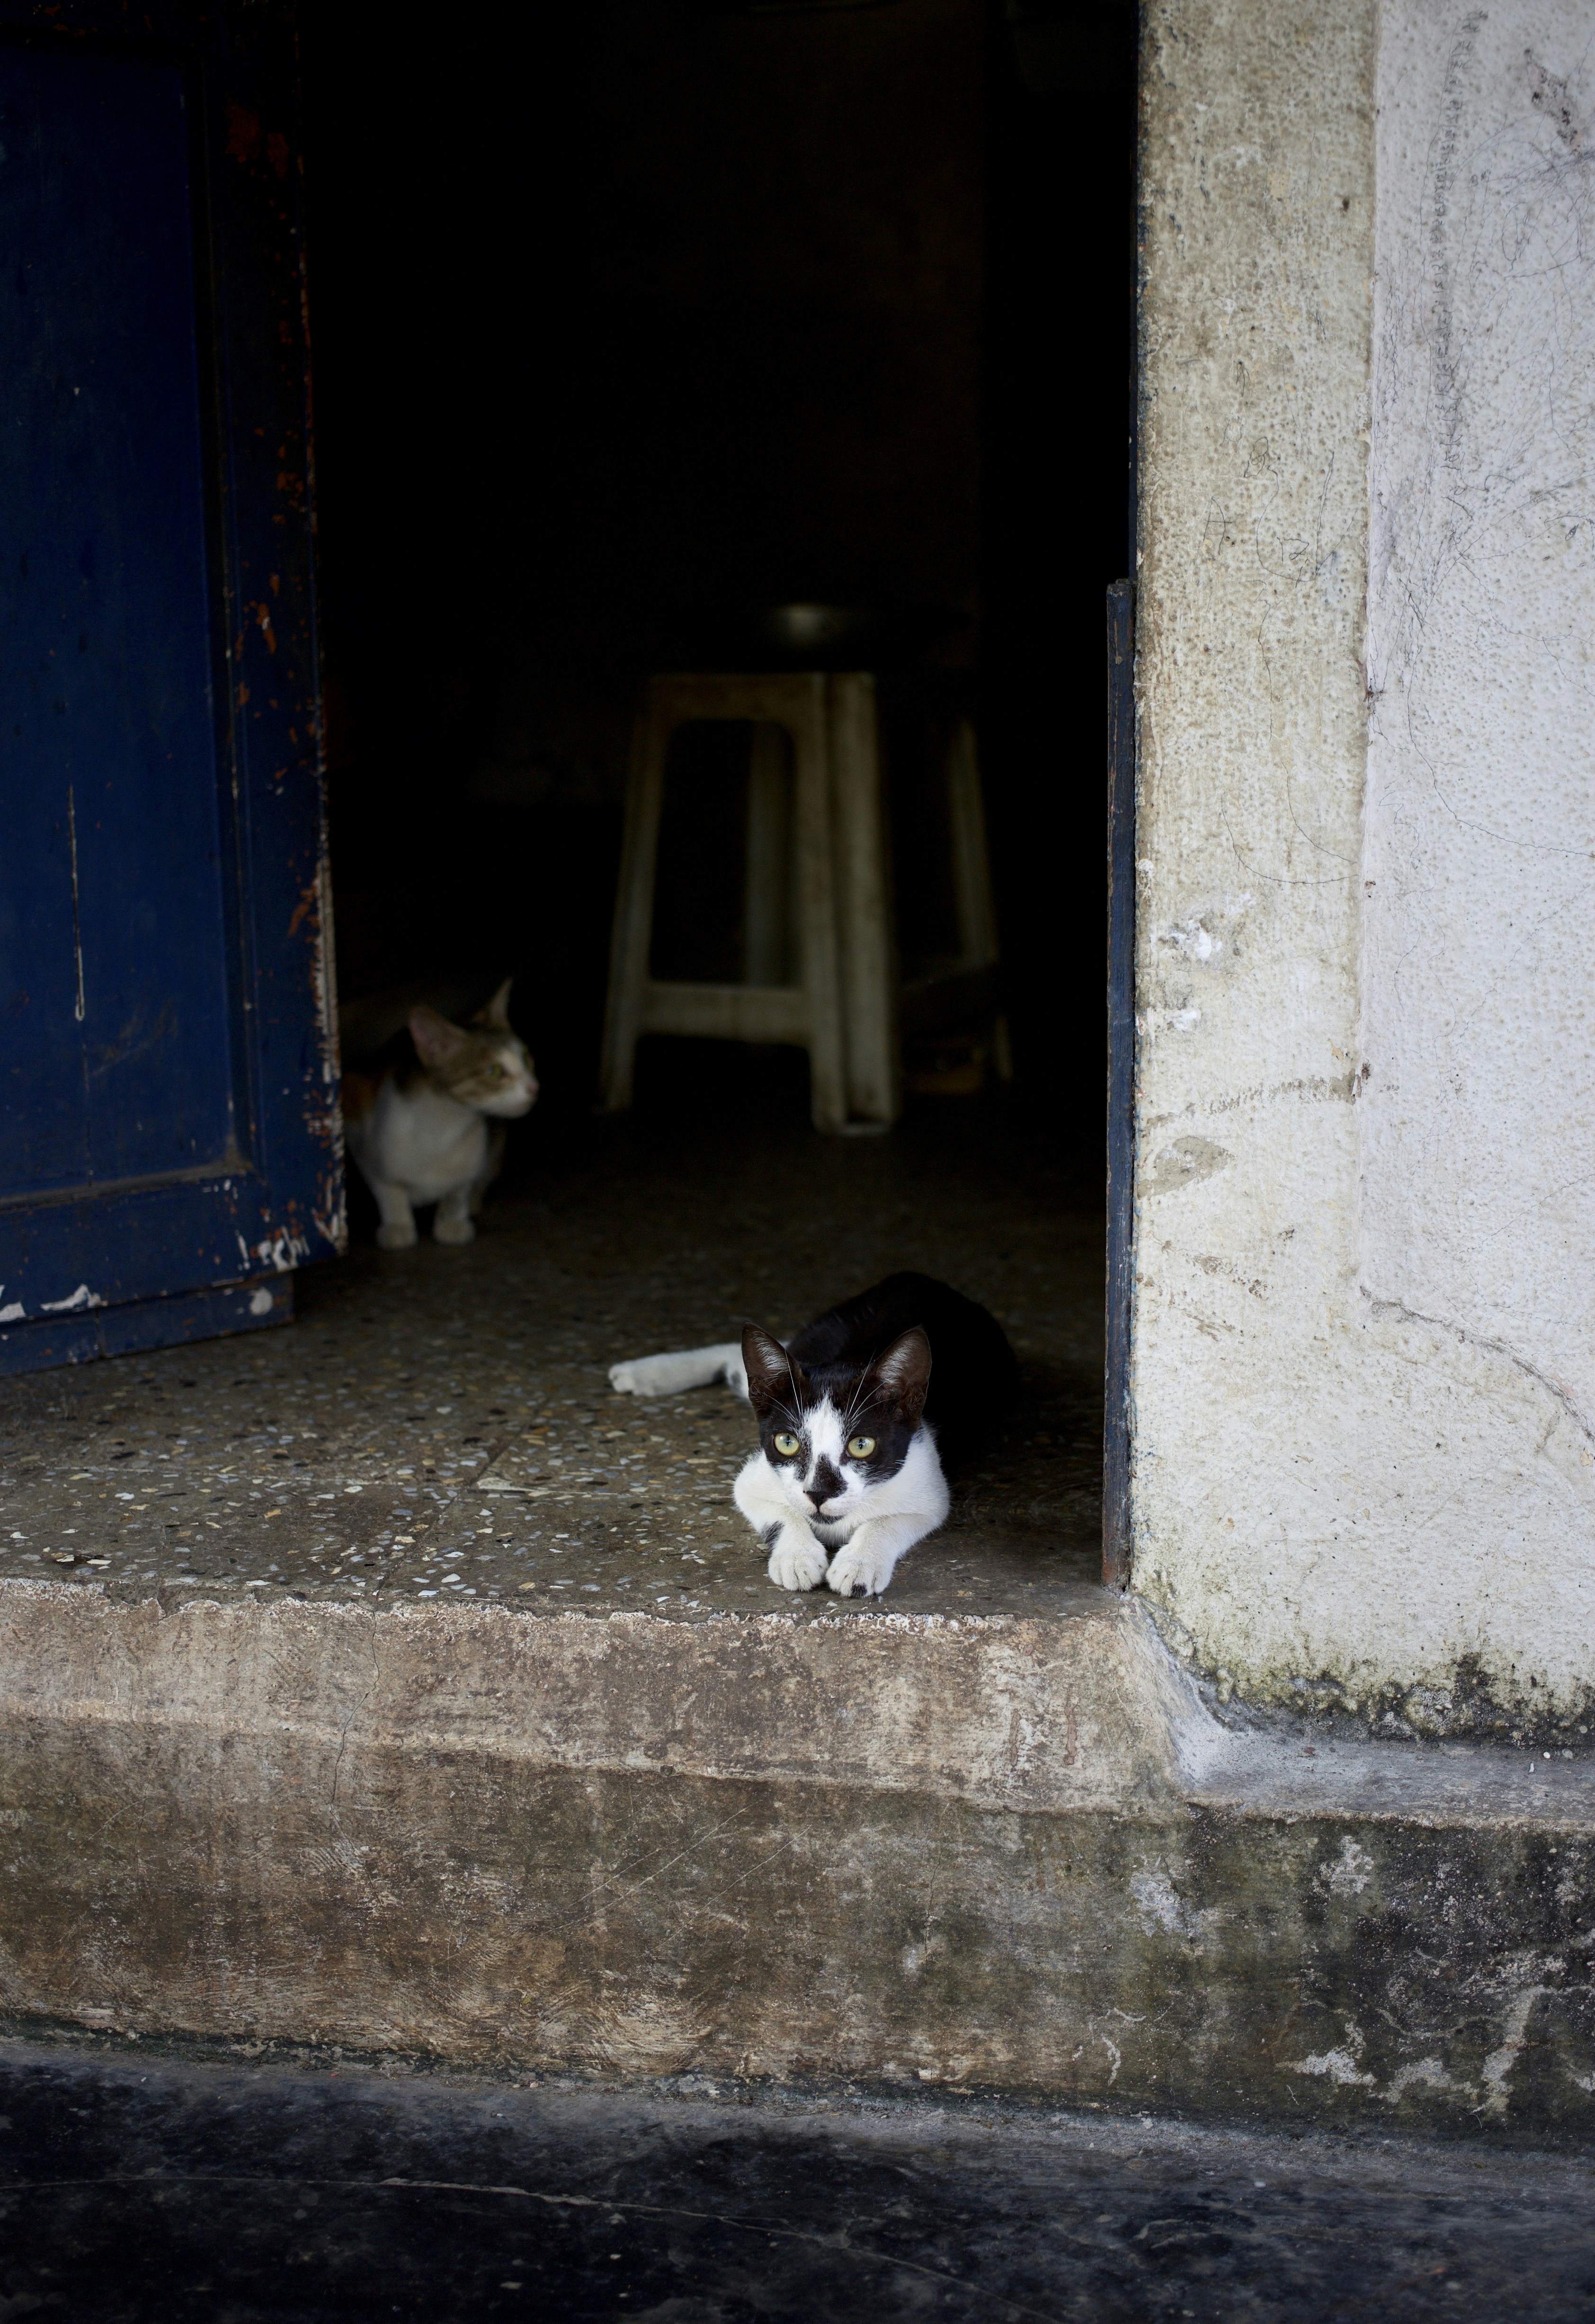 Cats at the door